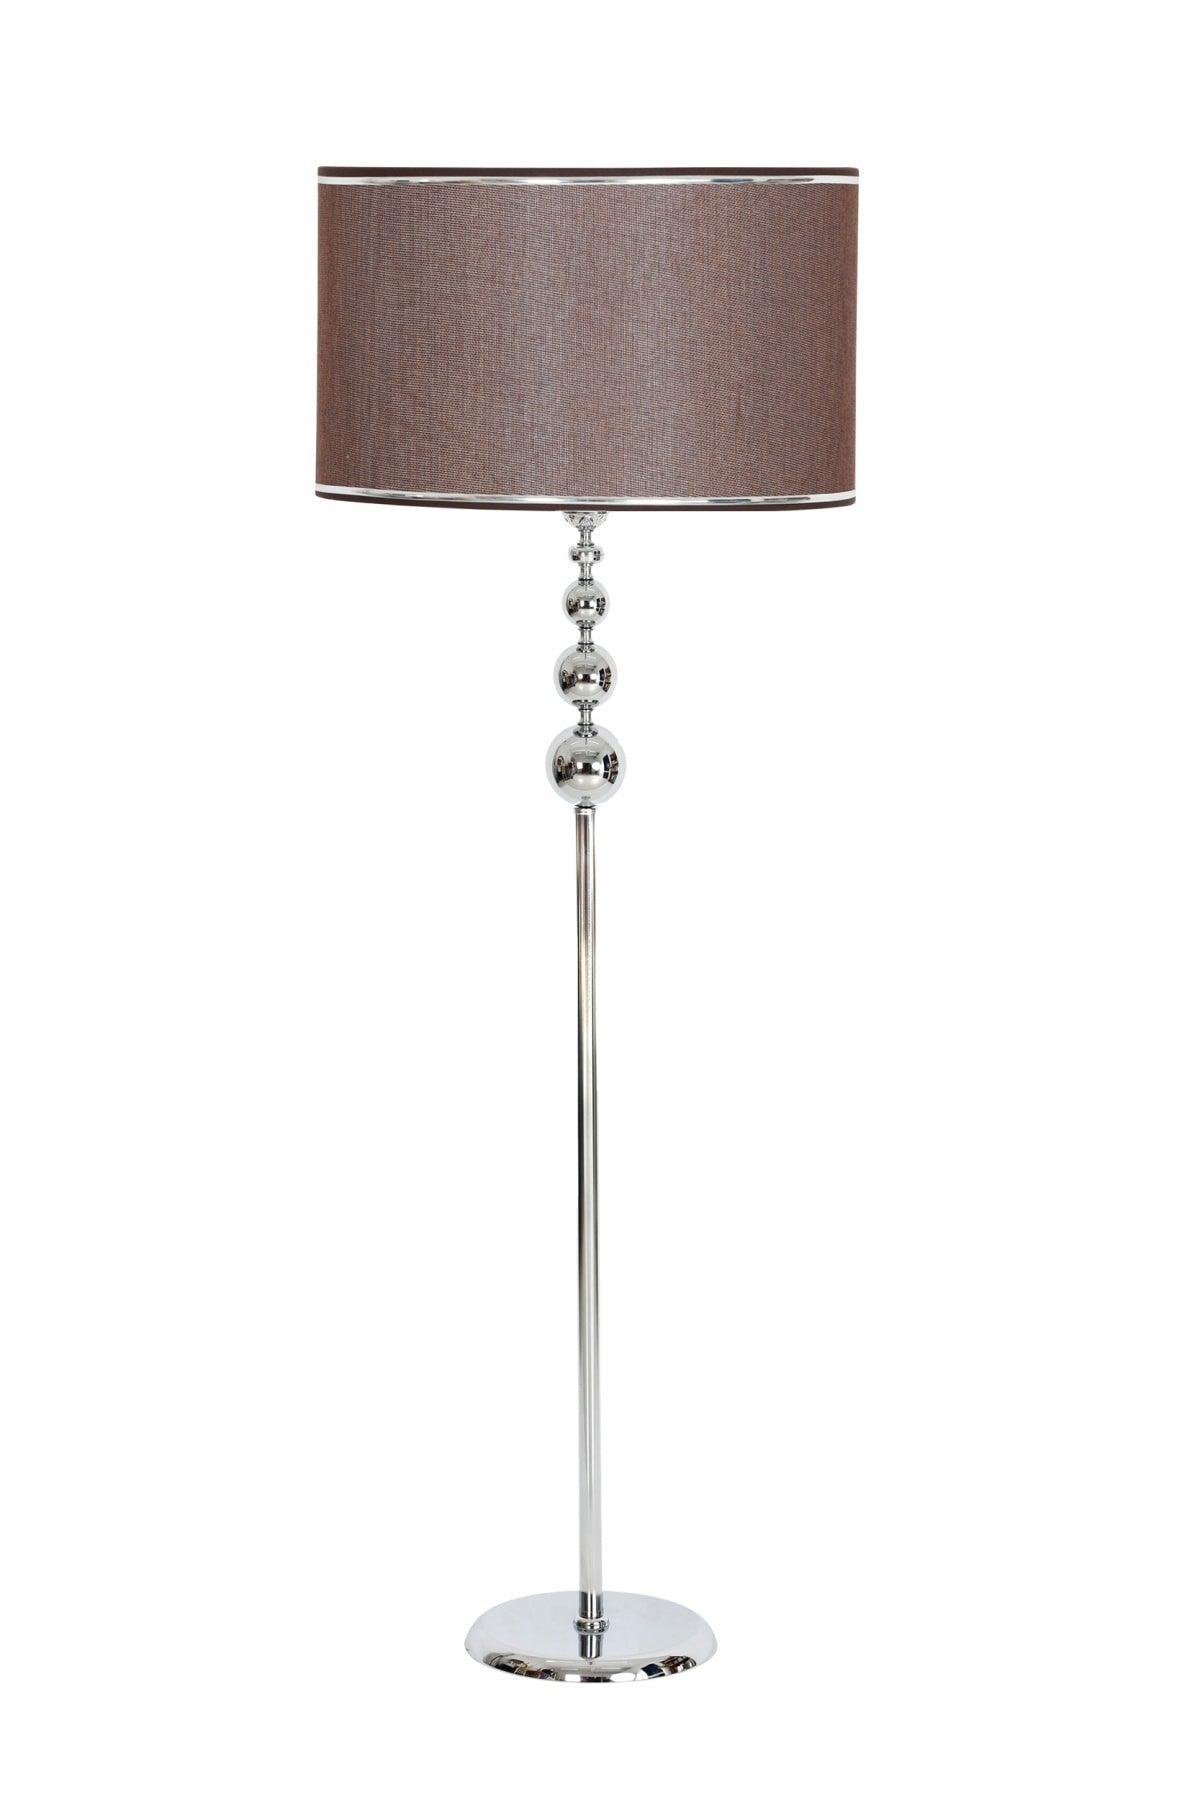 Chrome Plated Triple Sphere Flat Single Metal Leg Floor Lamp Chrome Detailed Head Color Dark Brown - Swordslife